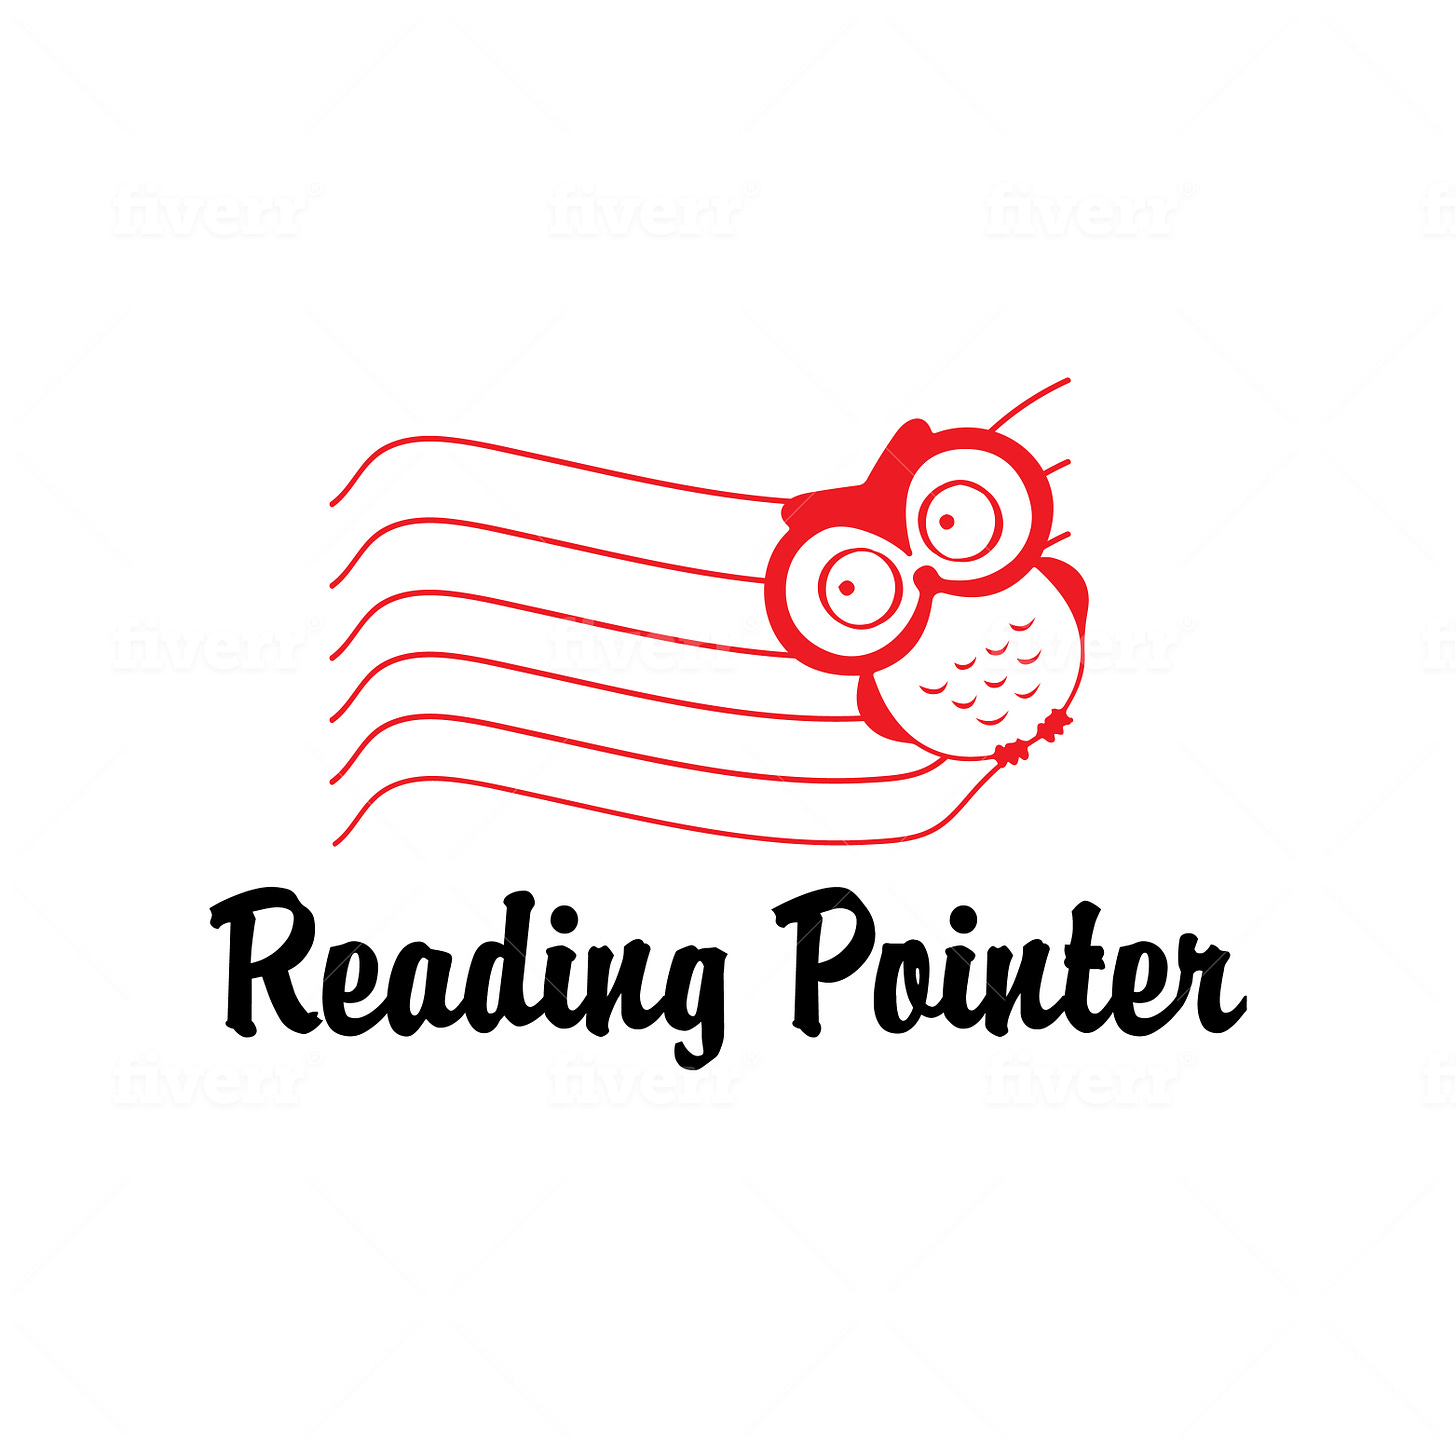 pointer-logo-fiverr-1.jpg